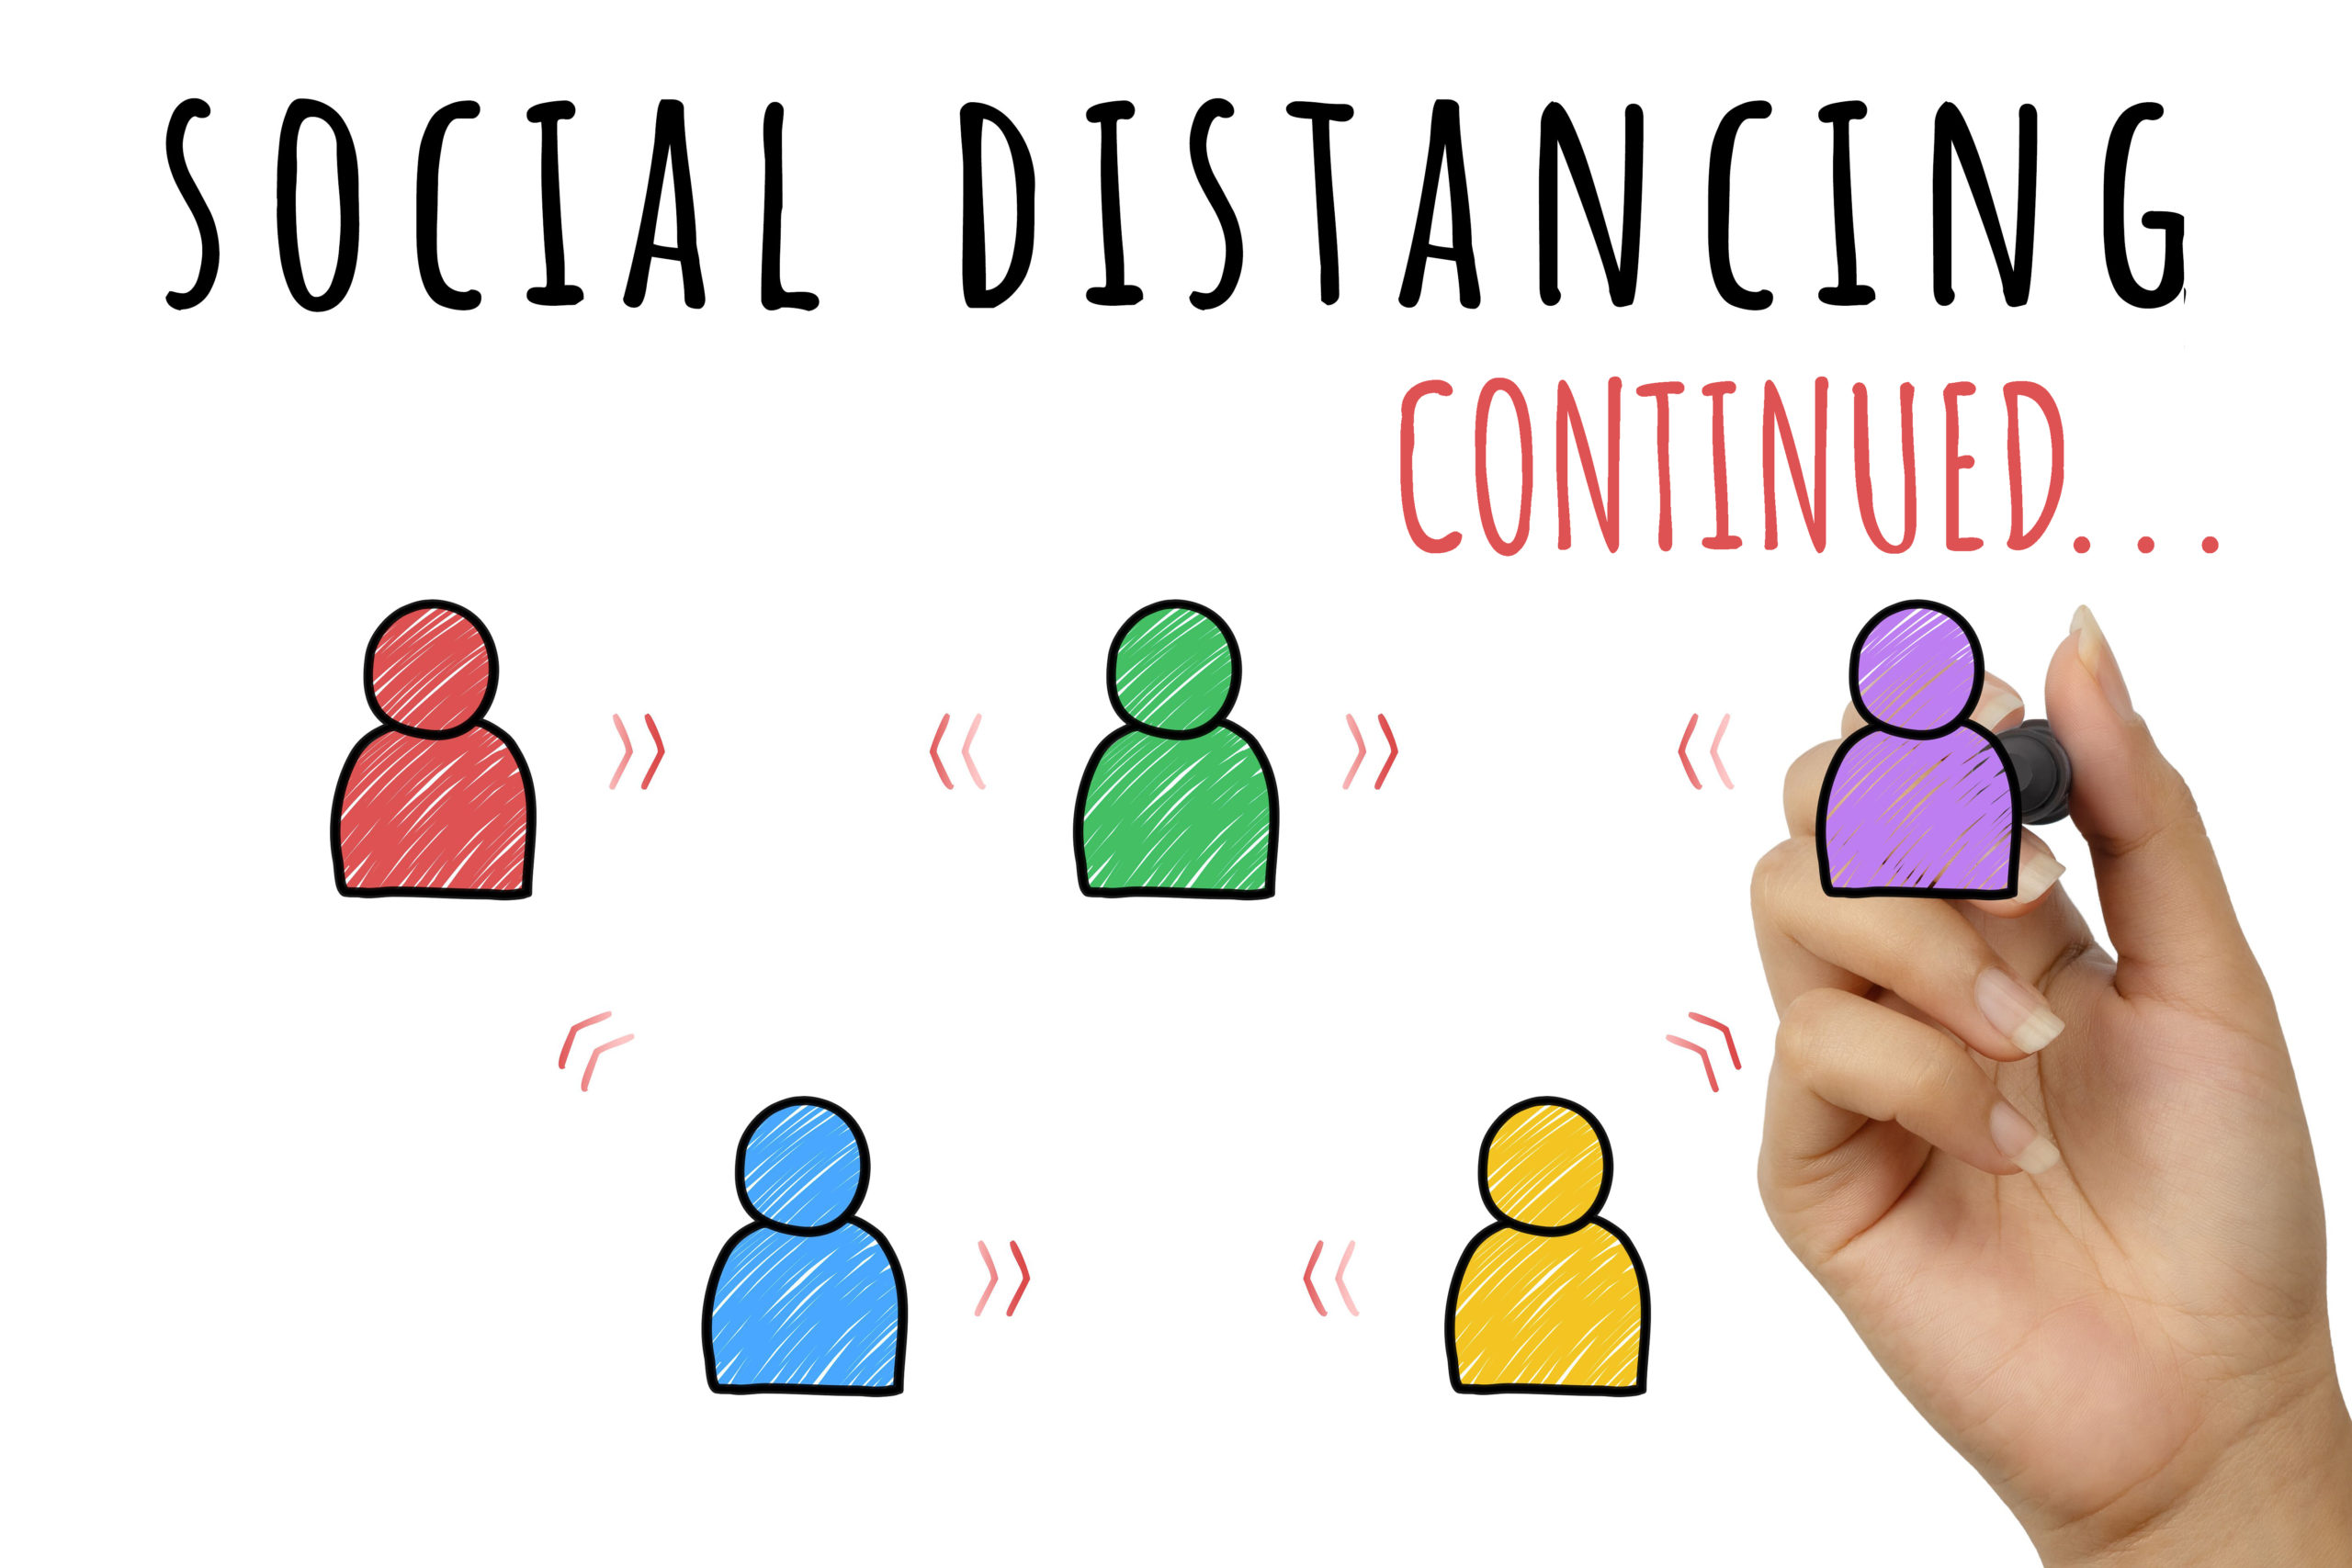 Social distancing continued